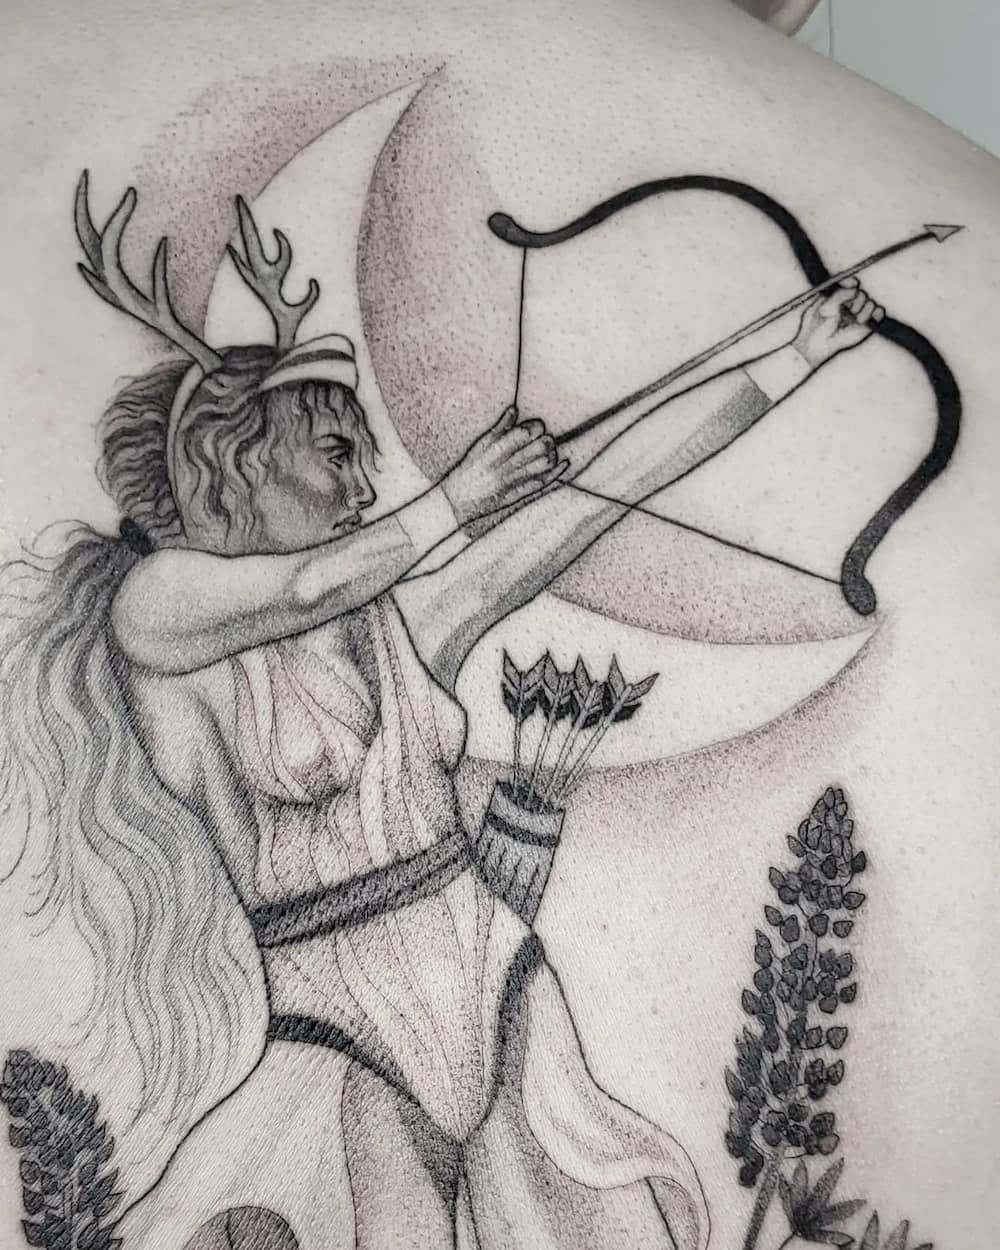 feminine greek goddess tattoos